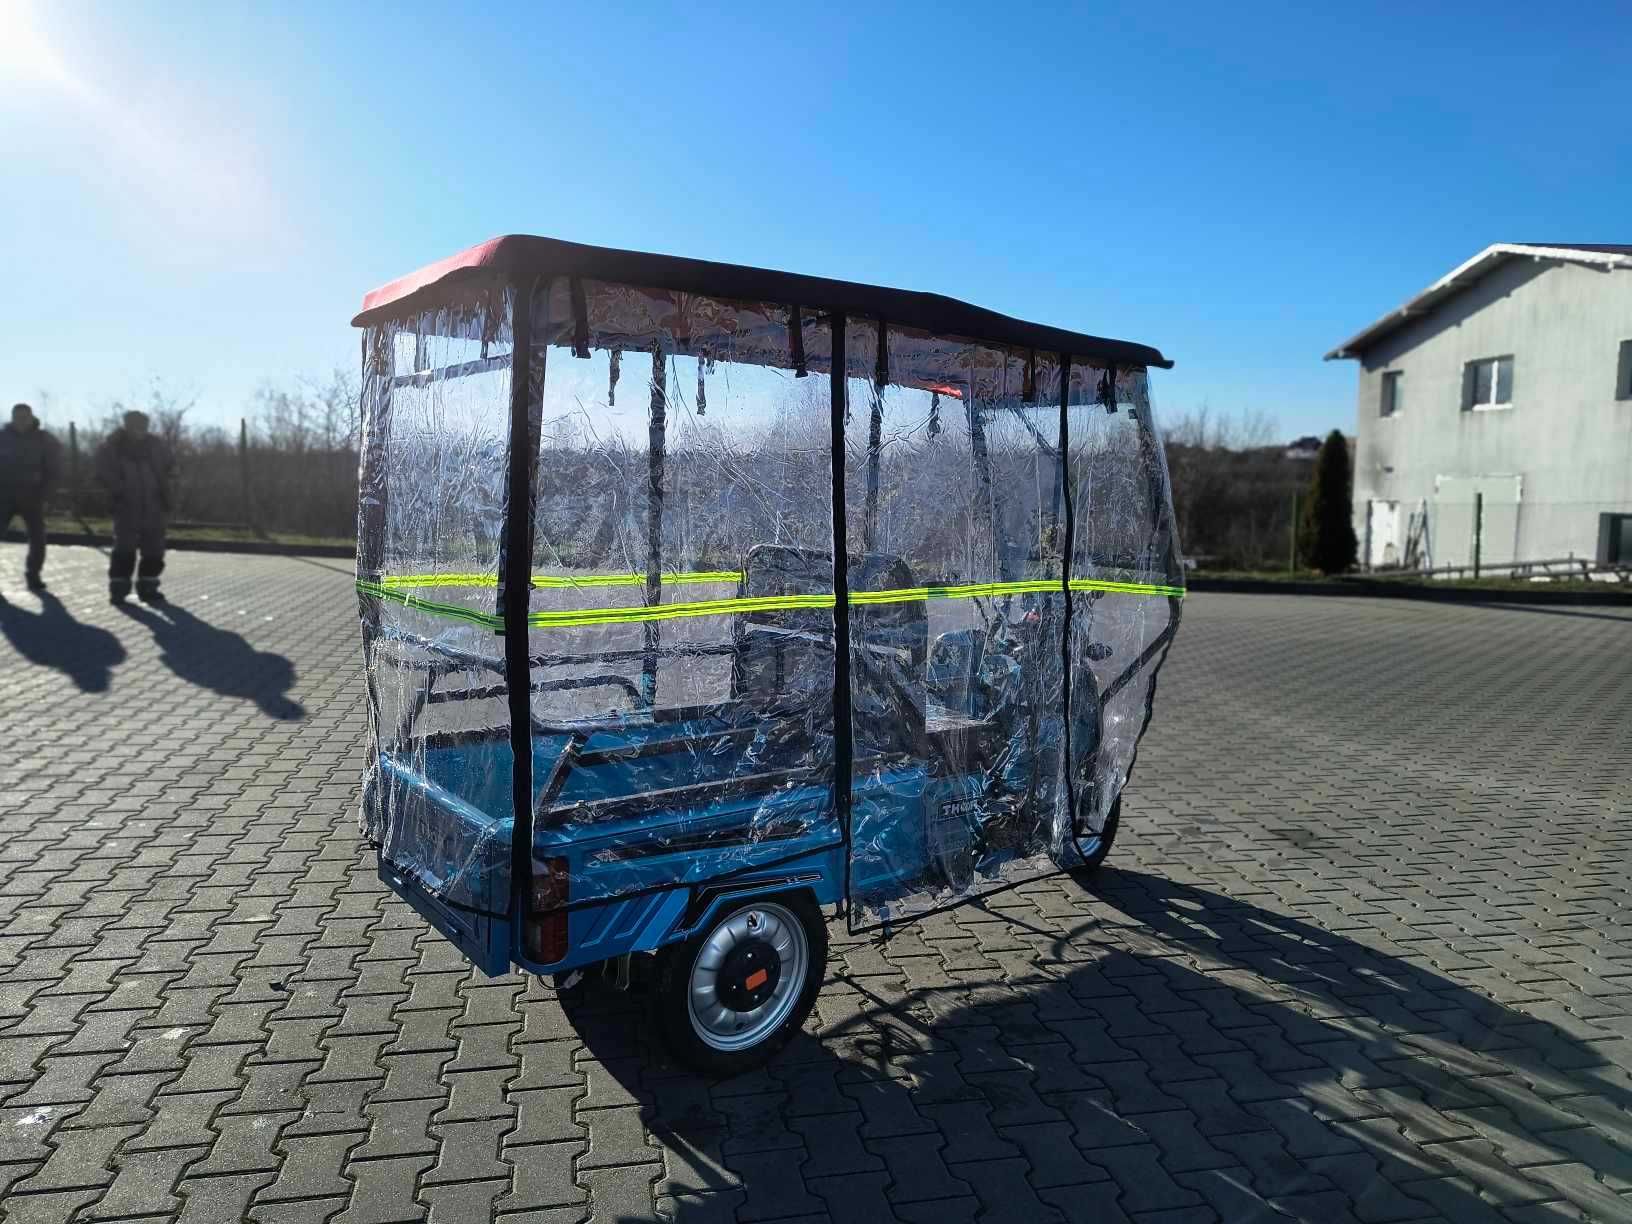 Acoperis pt tricicleta electrica Thor Baisan Thor City Eco prelata